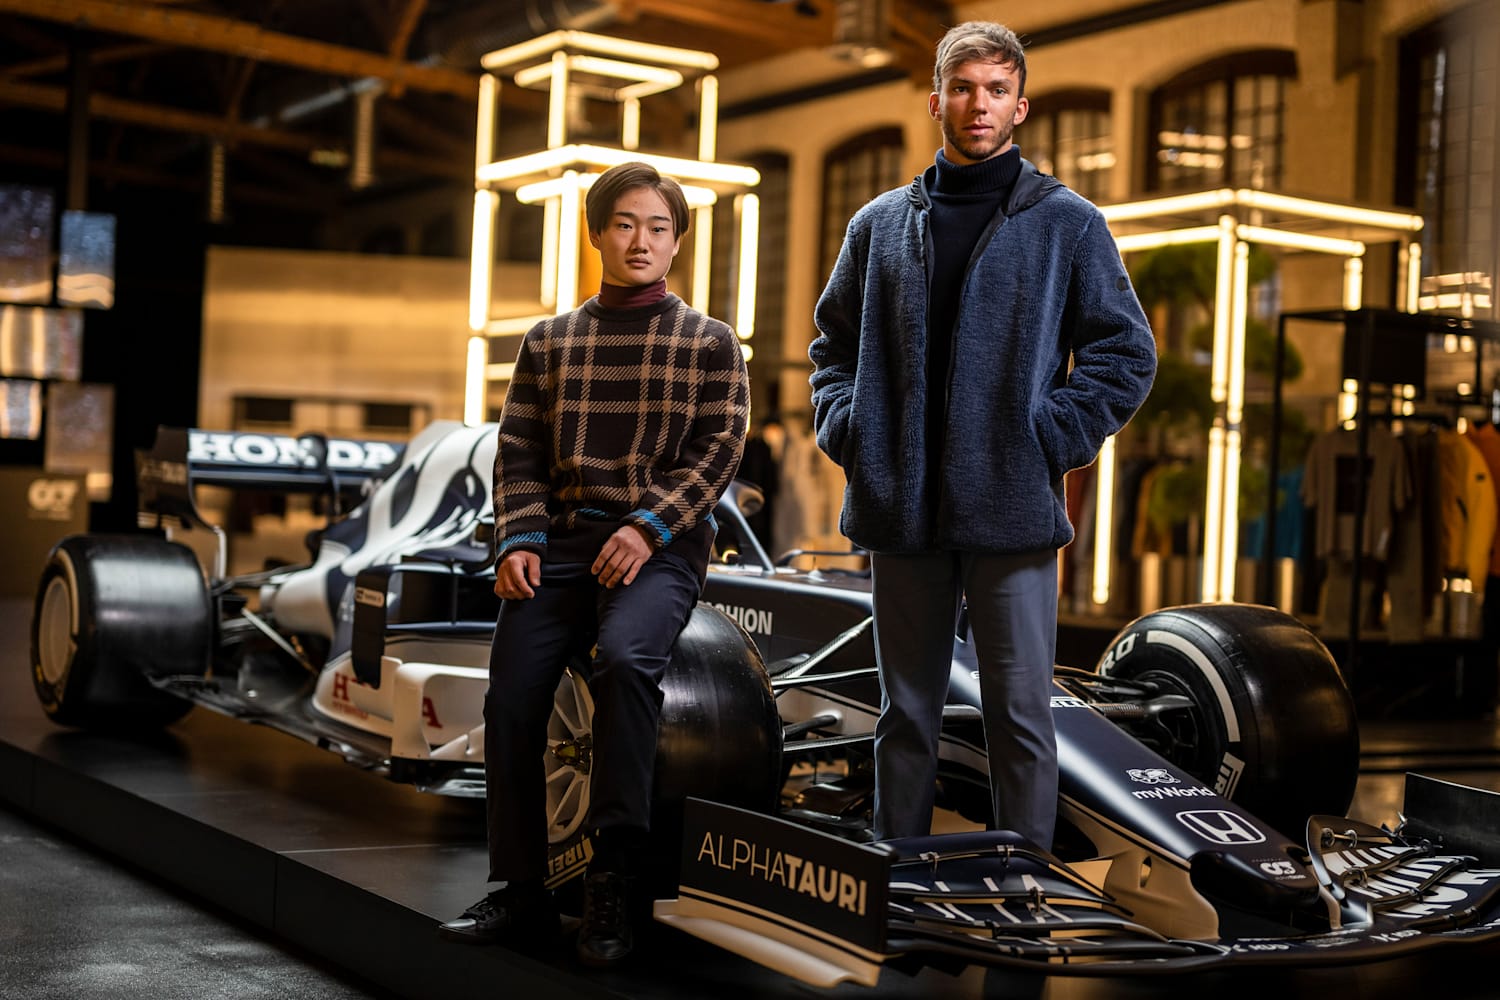 Formula 1 launches: AlphaTauri reveal new look for 2023 season